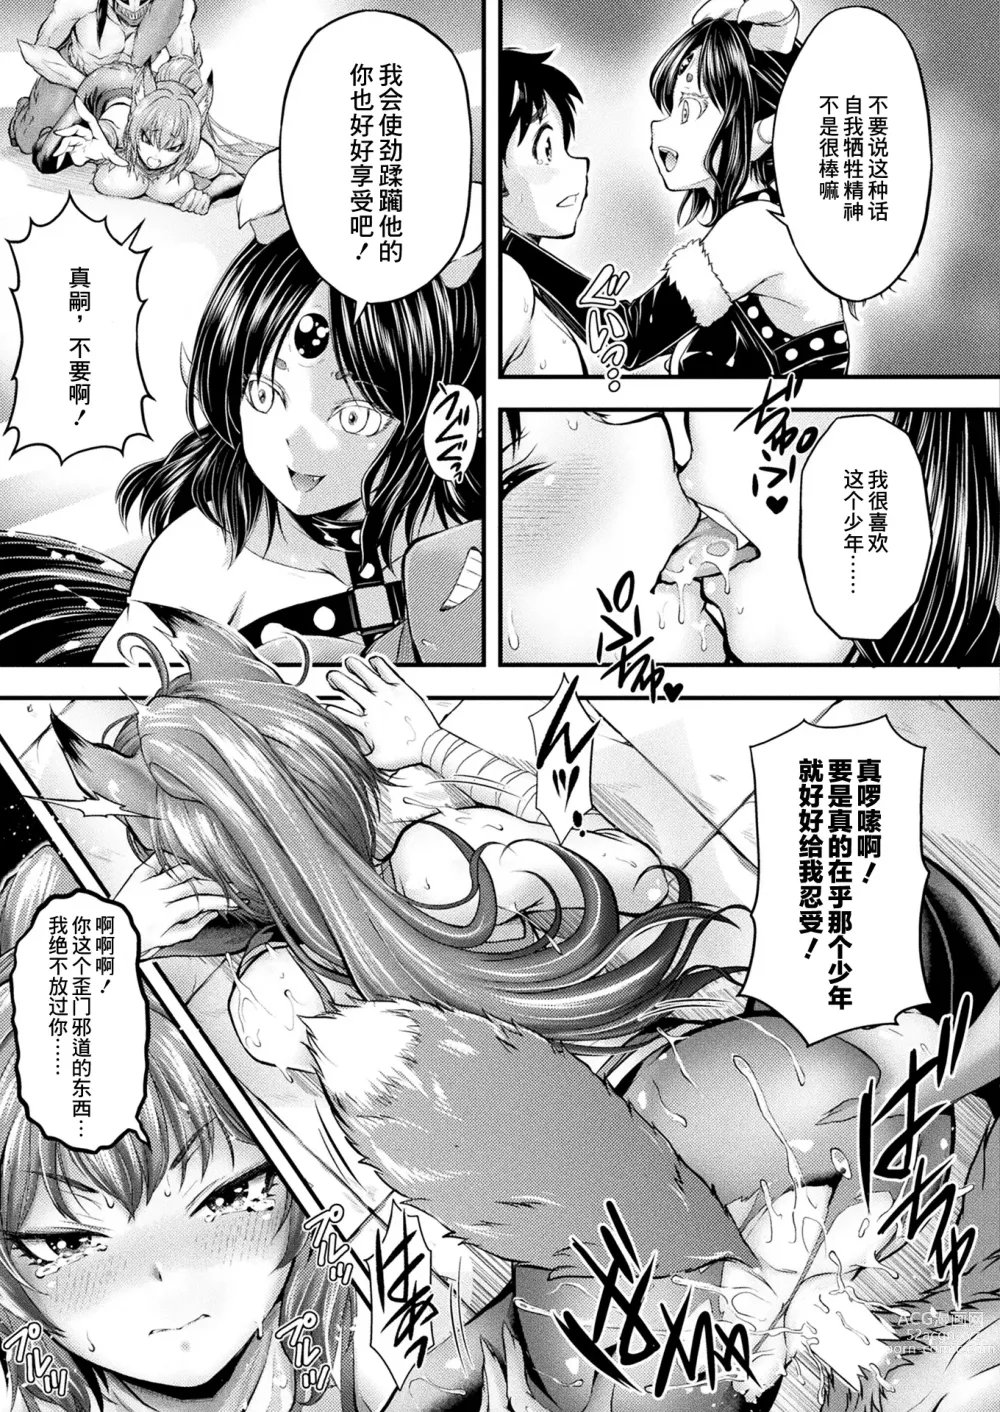 Page 9 of manga Felon Chaser Youko Kuzunoha Karen Kikiippatsu